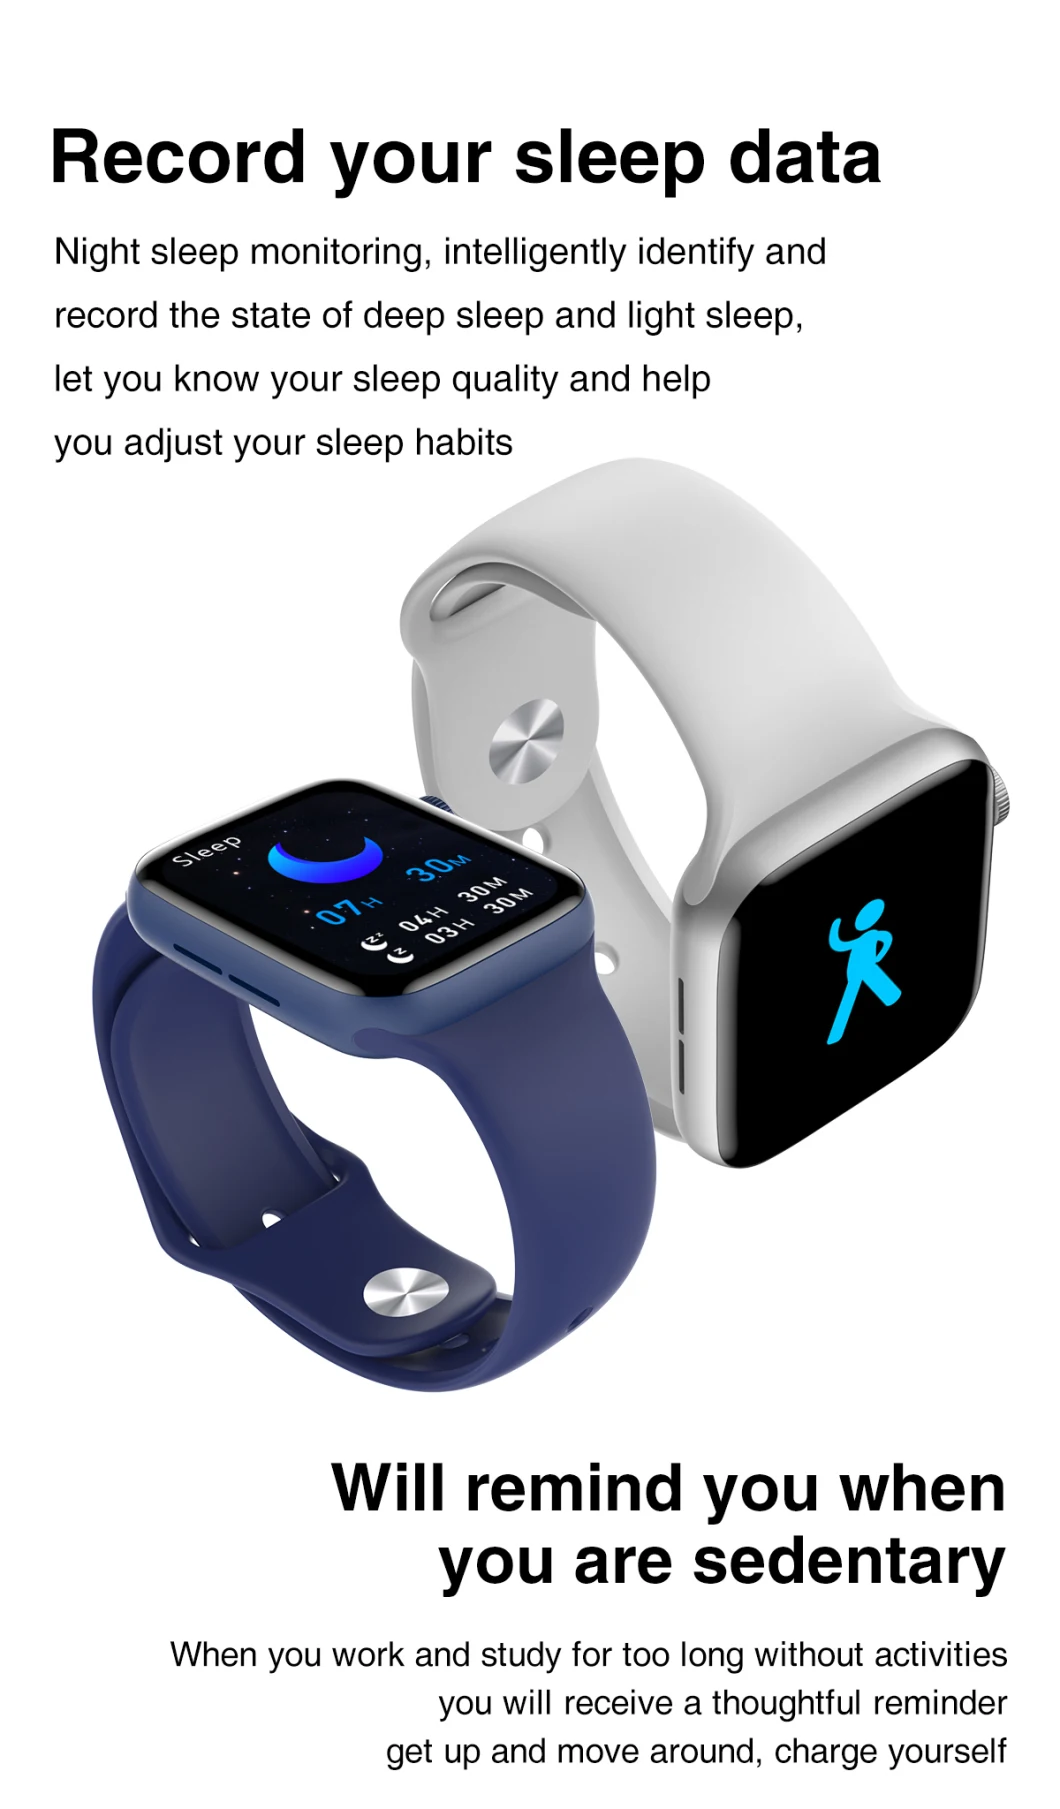 New Smart Watch Android Sport Bracelet Wrist Band Water Proof Swimming Running Wear Smart Phone Watch